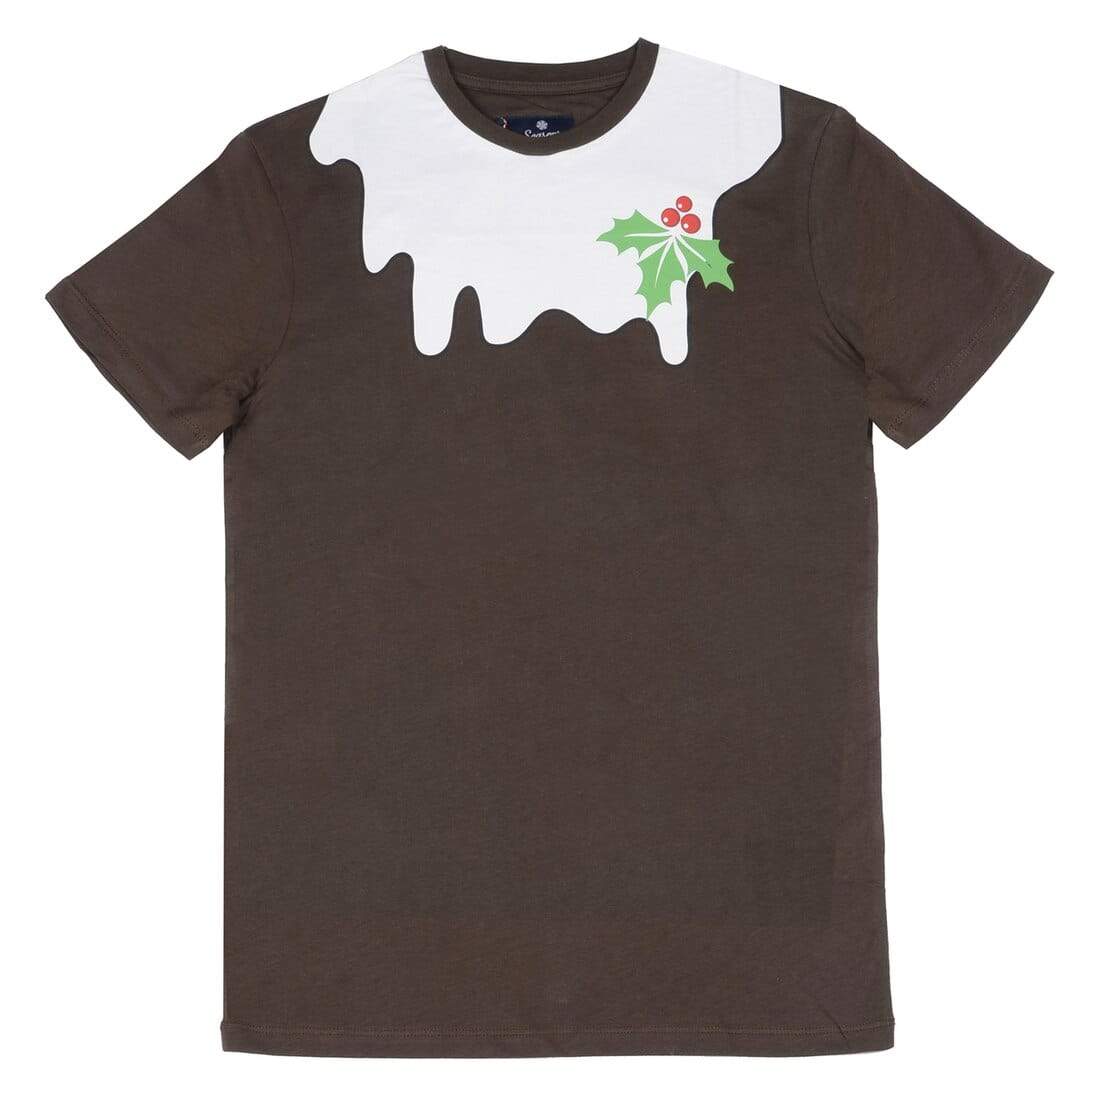 Mr Crimbo Mens Crew Brown Xmas Pudding Christmas T-Shirt - MrCrimbo.co.uk -VISMW06029_A - S -christmas day outfit